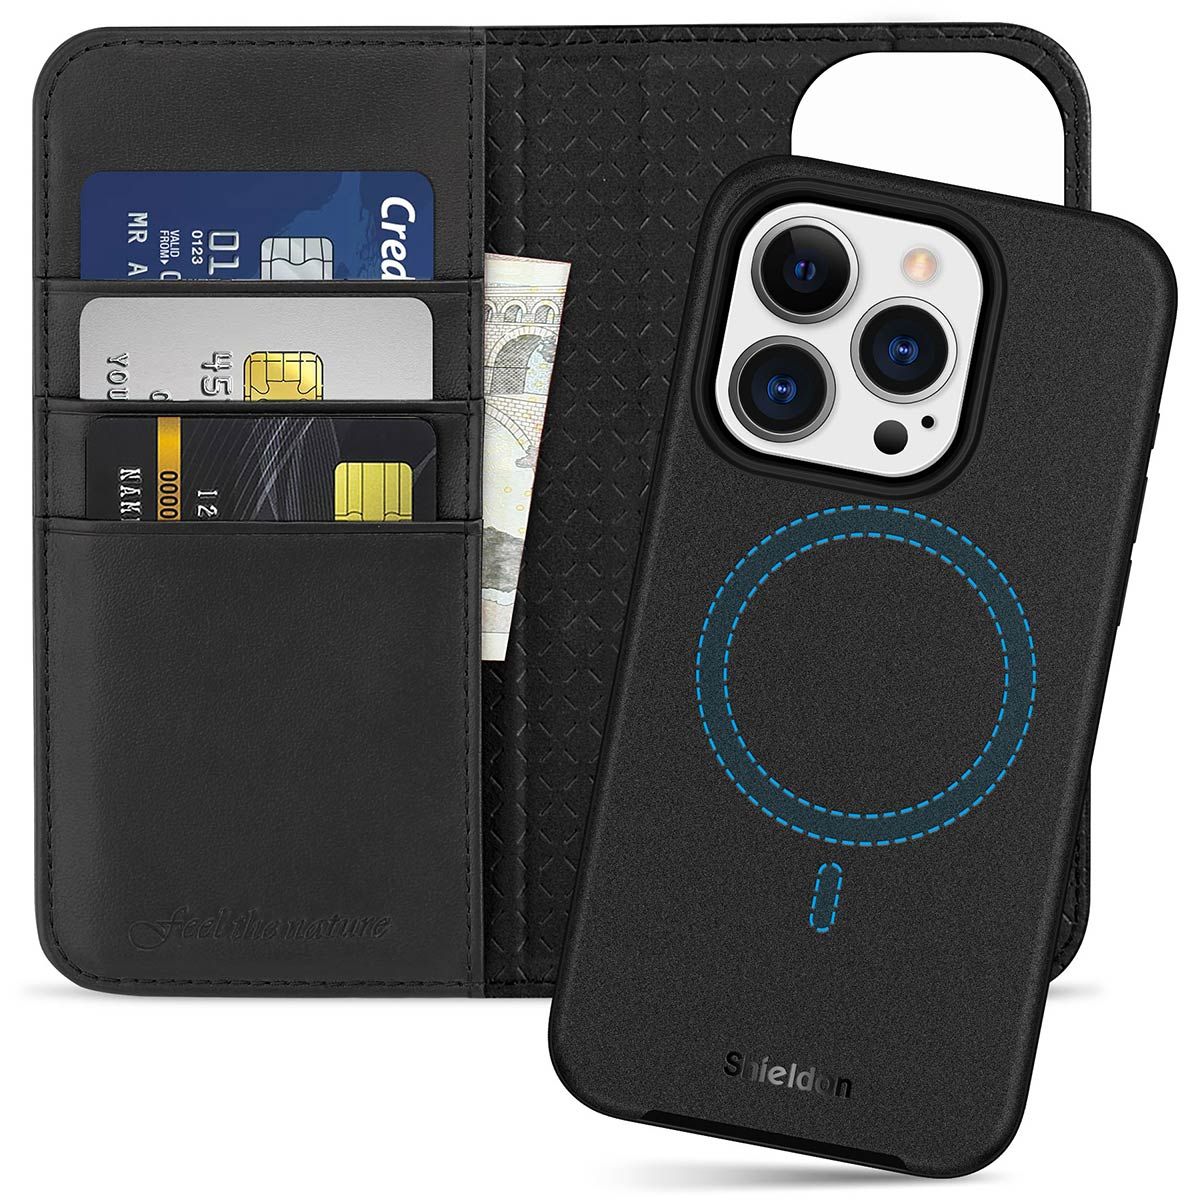 Vaultskin ETON - Leather Wallet Case for iPhone 15 Pro